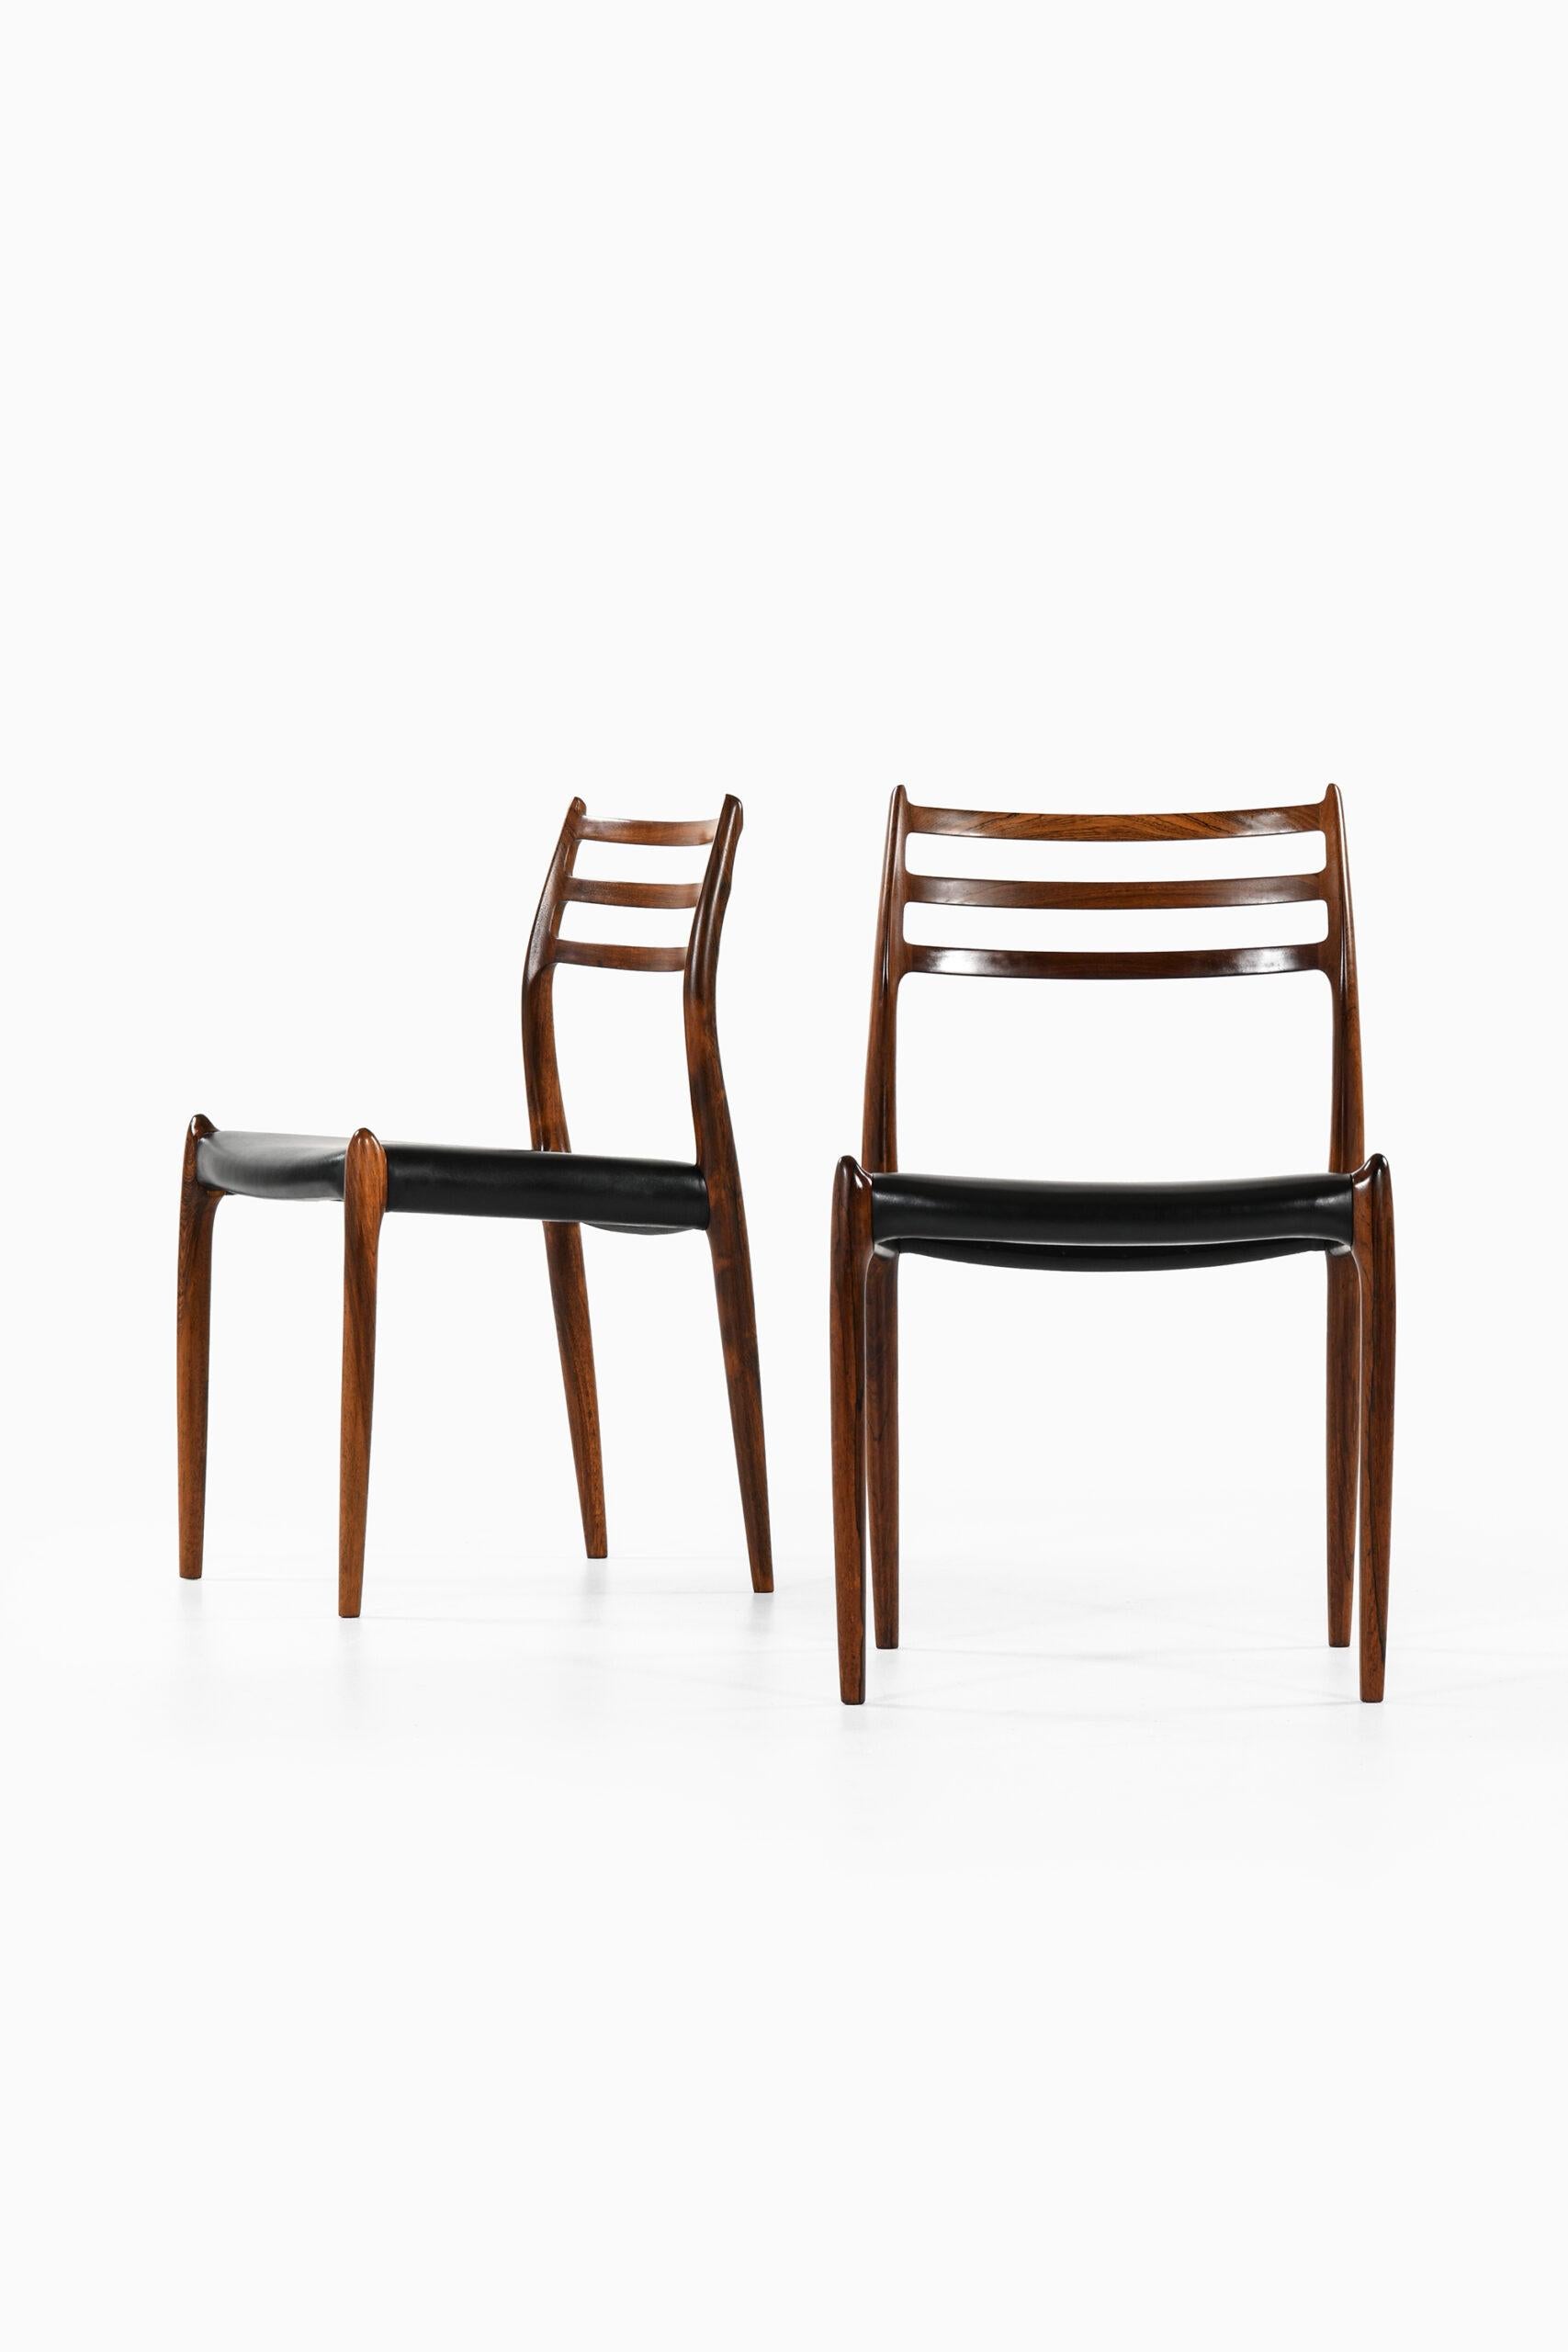 Rare set of 6 dining chairs model 78 designed by Niels O. Møller. Produced by J.L Møllers Møbelfabrik in Denmark.